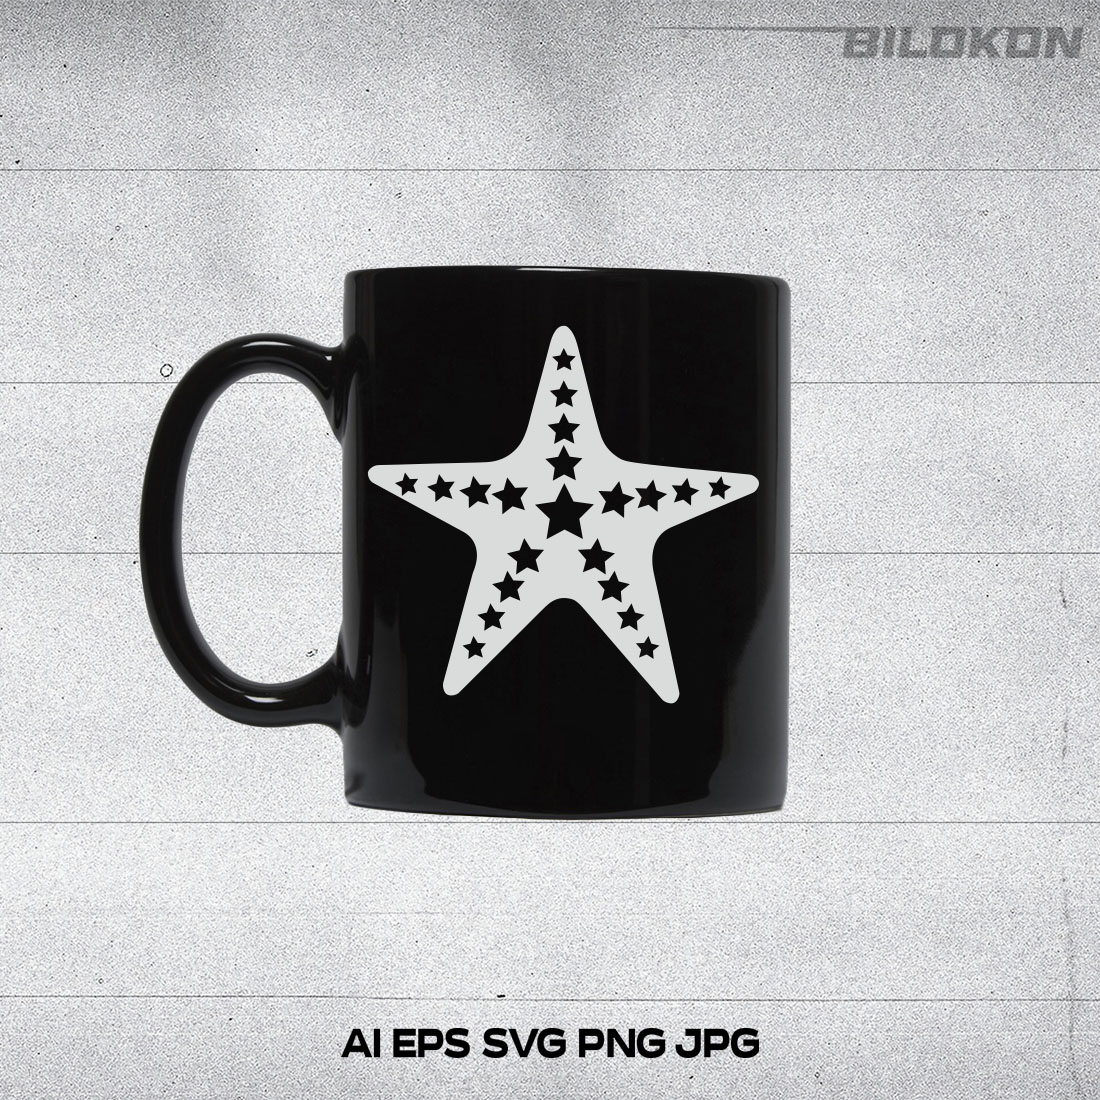 Black coffee mug with a white star on it.